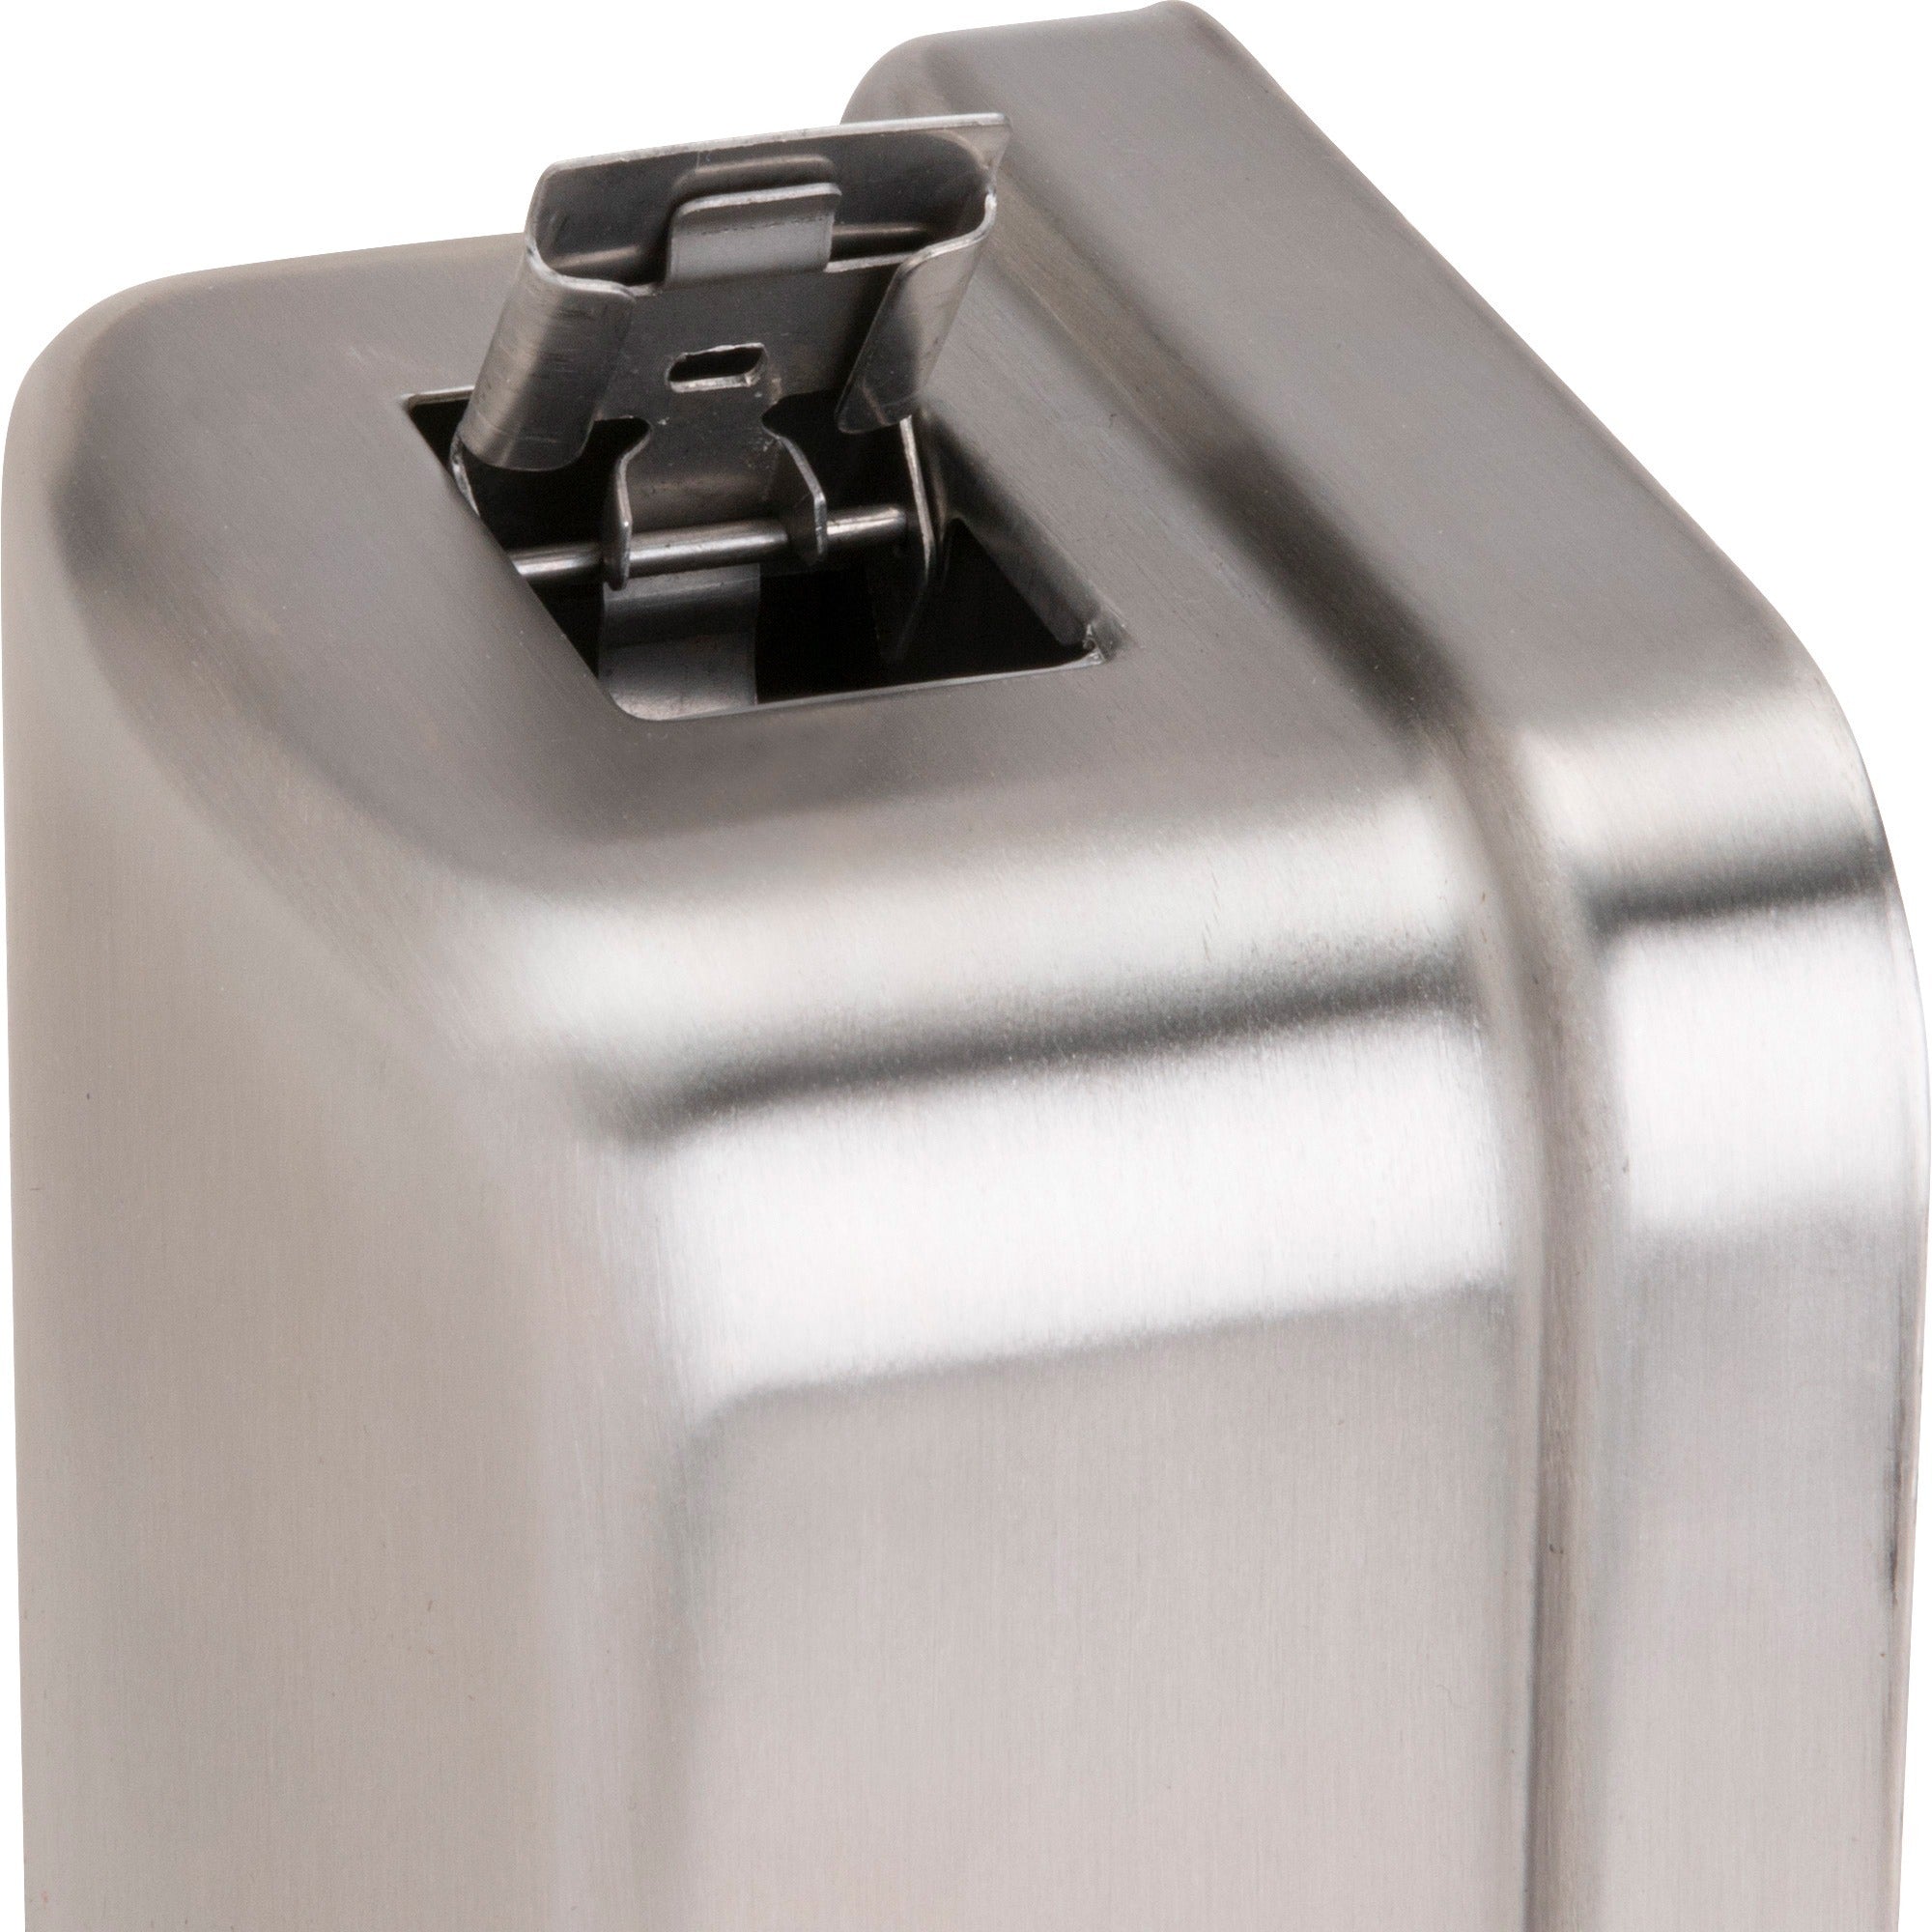 genuine-joe-liquid-lotion-soap-dispenser-manual-3150-fl-oz-capacity-corrosion-resistant-wall-mountable-rust-proof-stainless-steel-1each_gjo02201 - 6